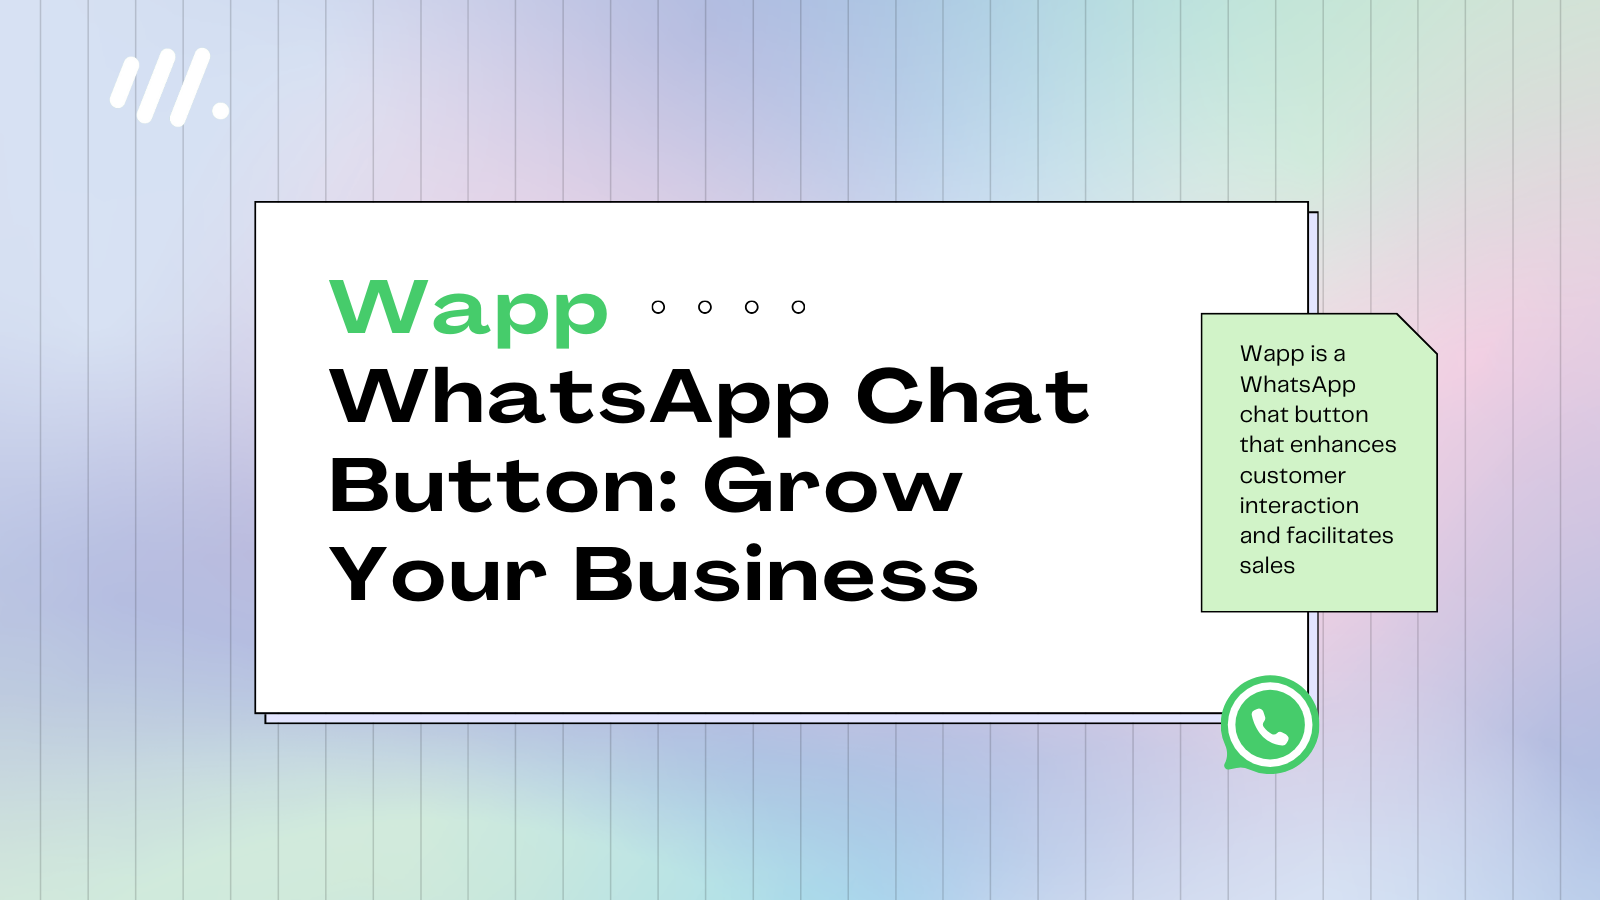 Wapp - Botón de Chat de WhatsApp y recuperación de carritos abandonados